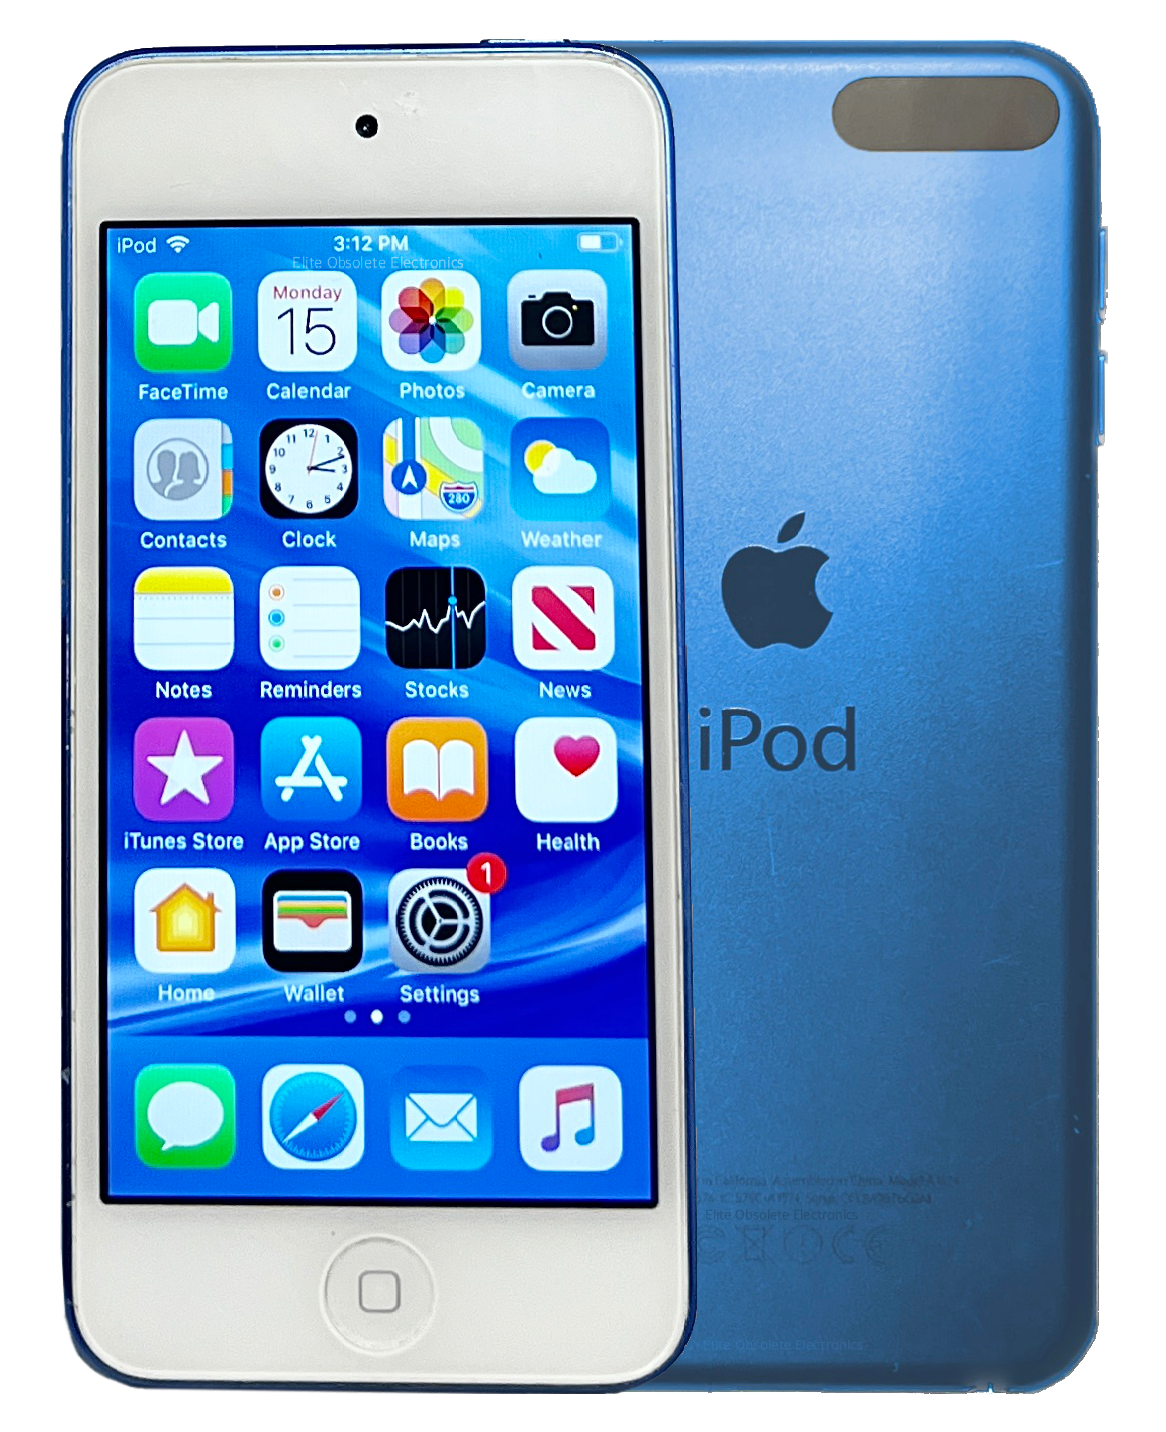 Refurbished Apple iPod Touch 6th Generation Blue 16GB 32GB 128GB A1574 MKH22LL/A MKHV2LL/A MKWP2LL/A